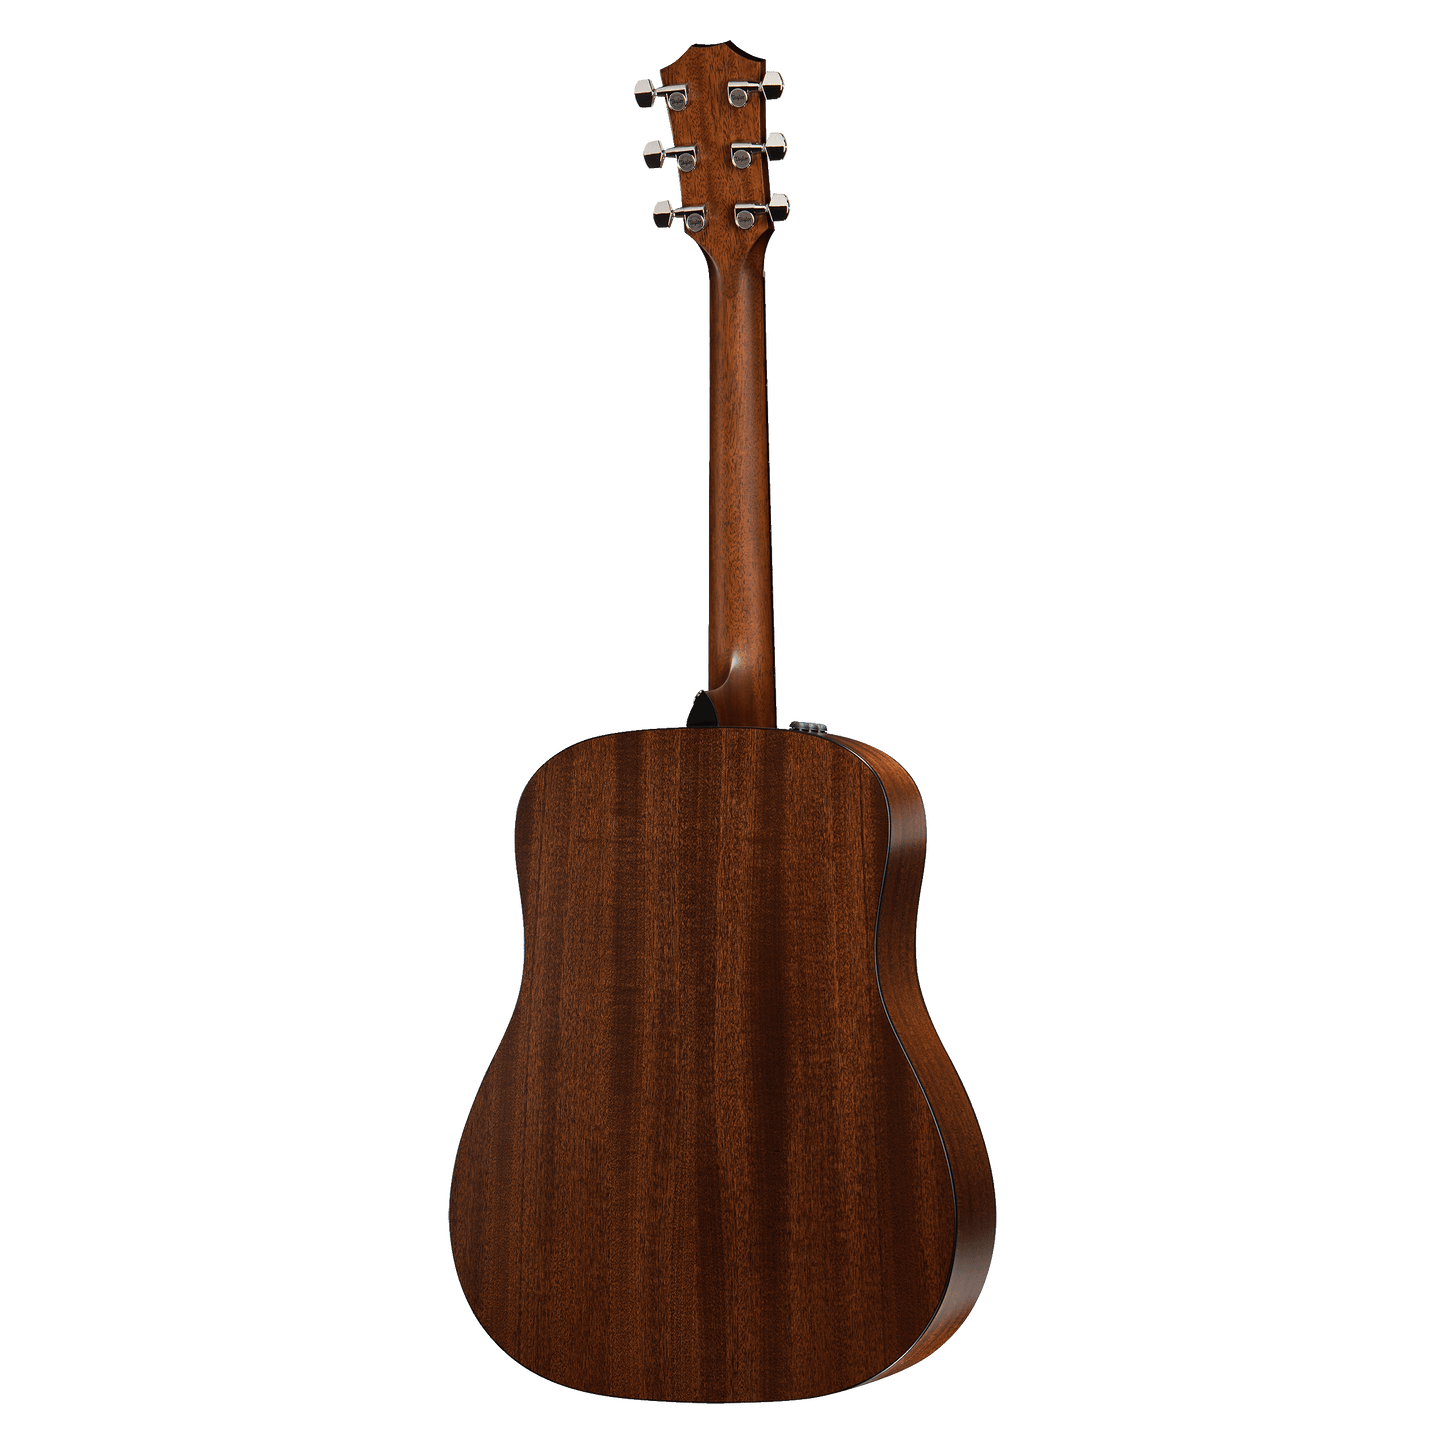 Taylor 310e Dreadnought Acoustic Electric Guitar w/ Case